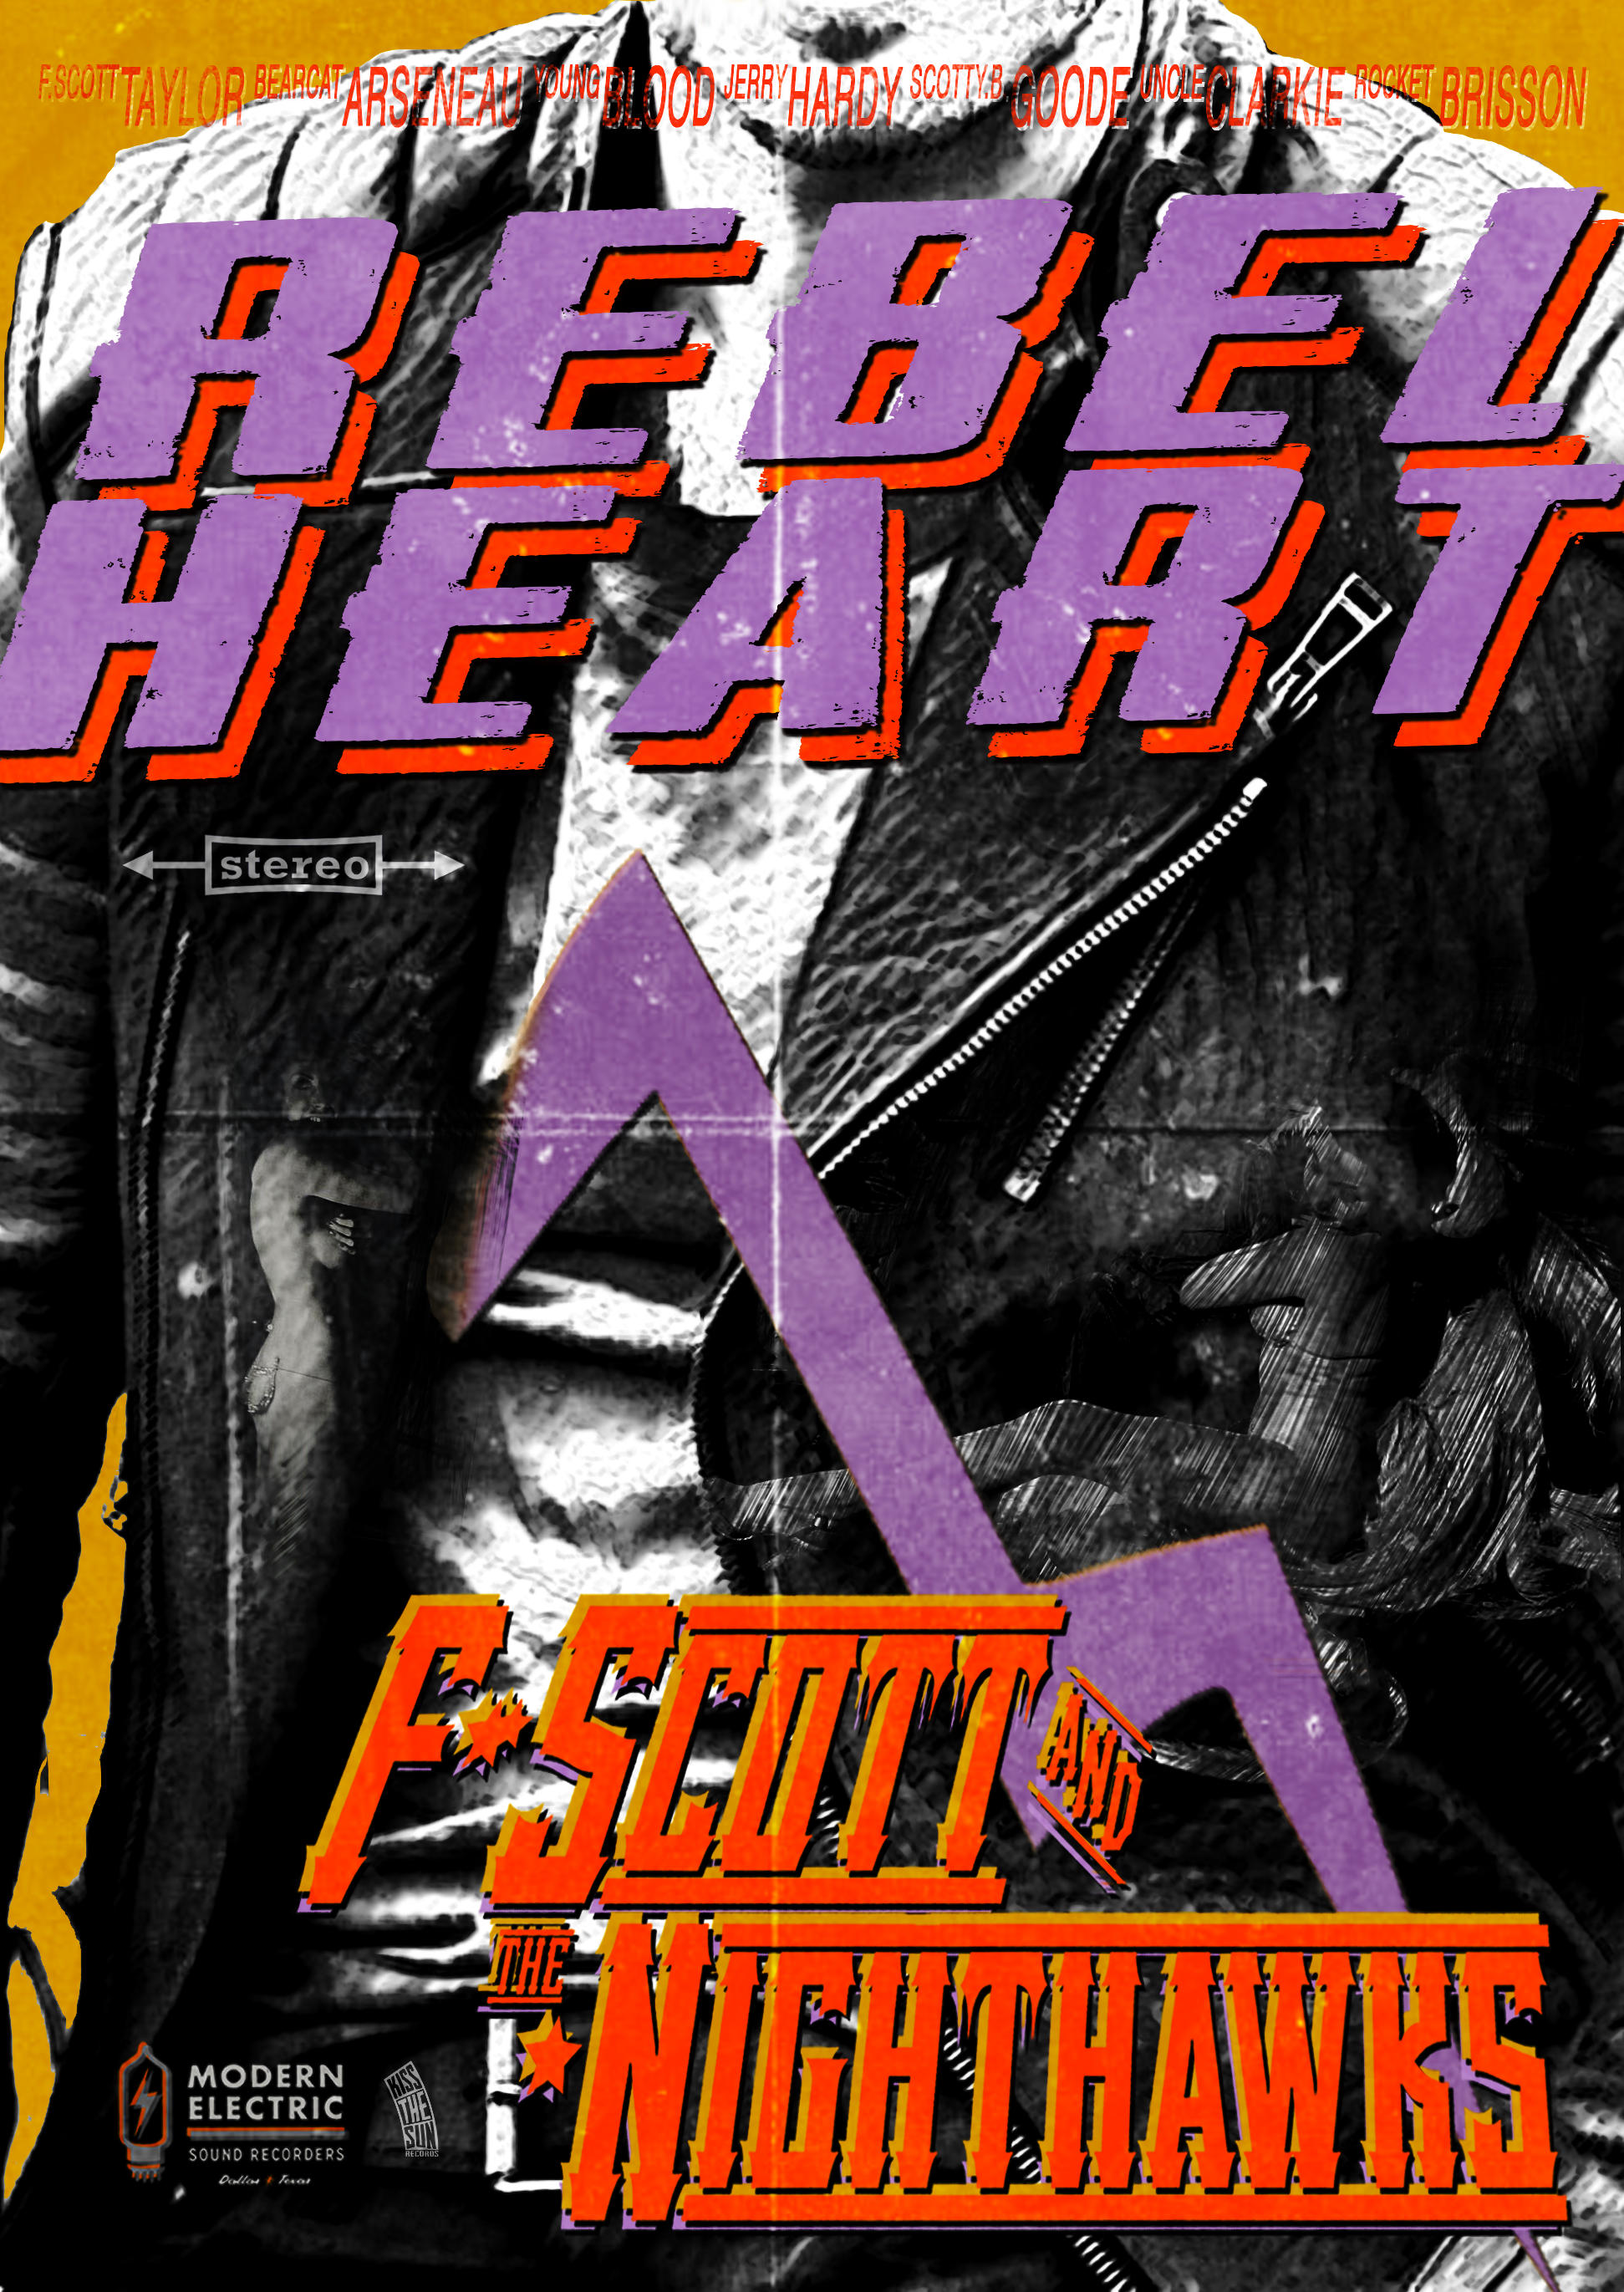 FSCOTT-Rebel-Heart.png